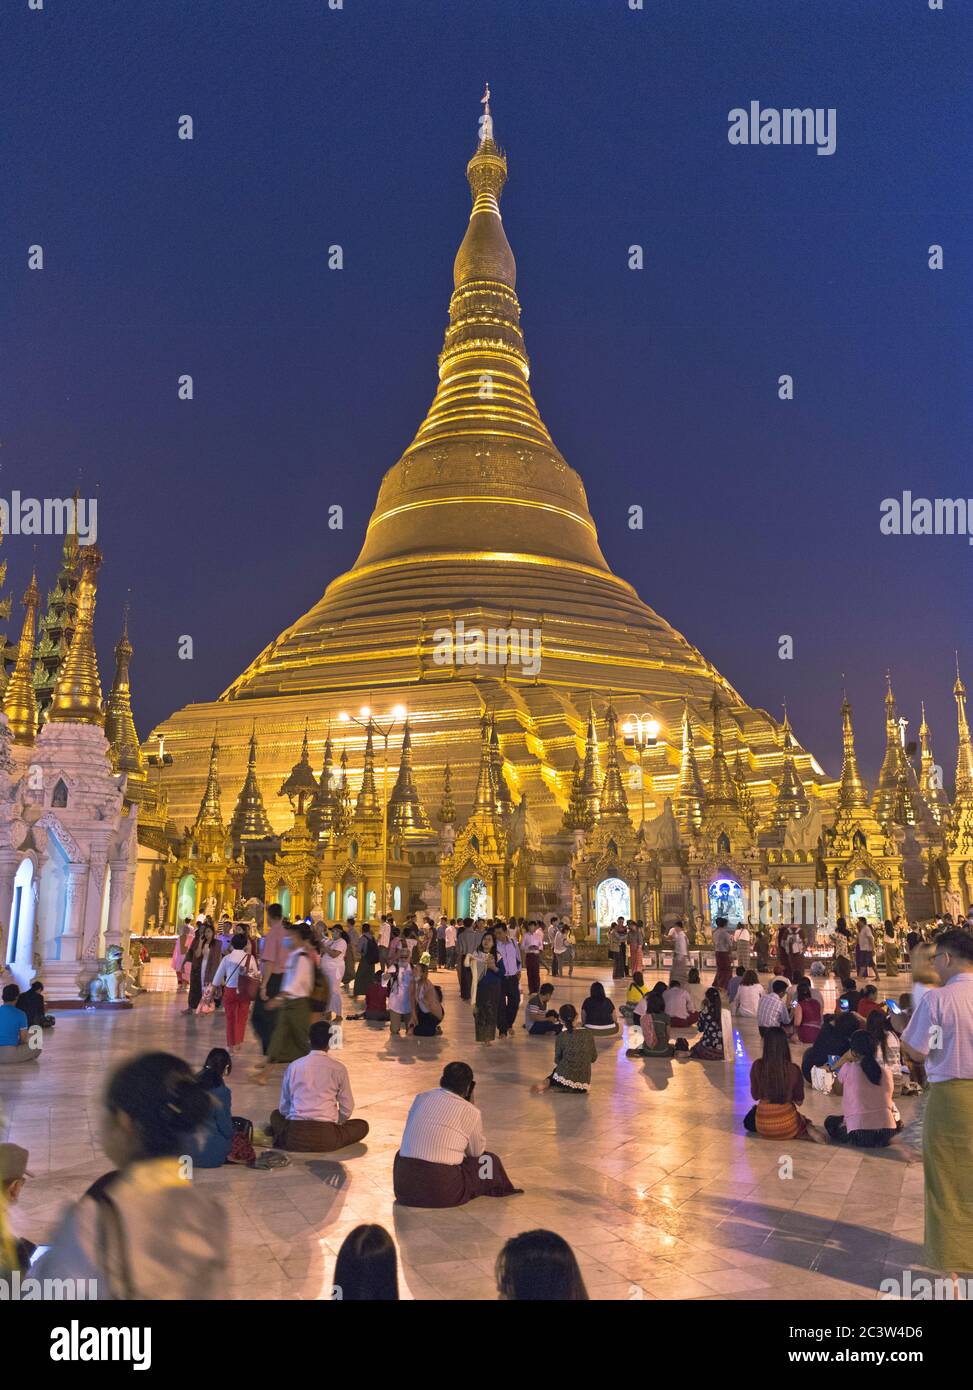 dh Shwedagon Pagodentempel YANGON MYANMAR Birmanische Menschen buddhistische Tempel Nacht großer Dagon Zedi Daw goldenen Stupa Blattgold Stockfoto